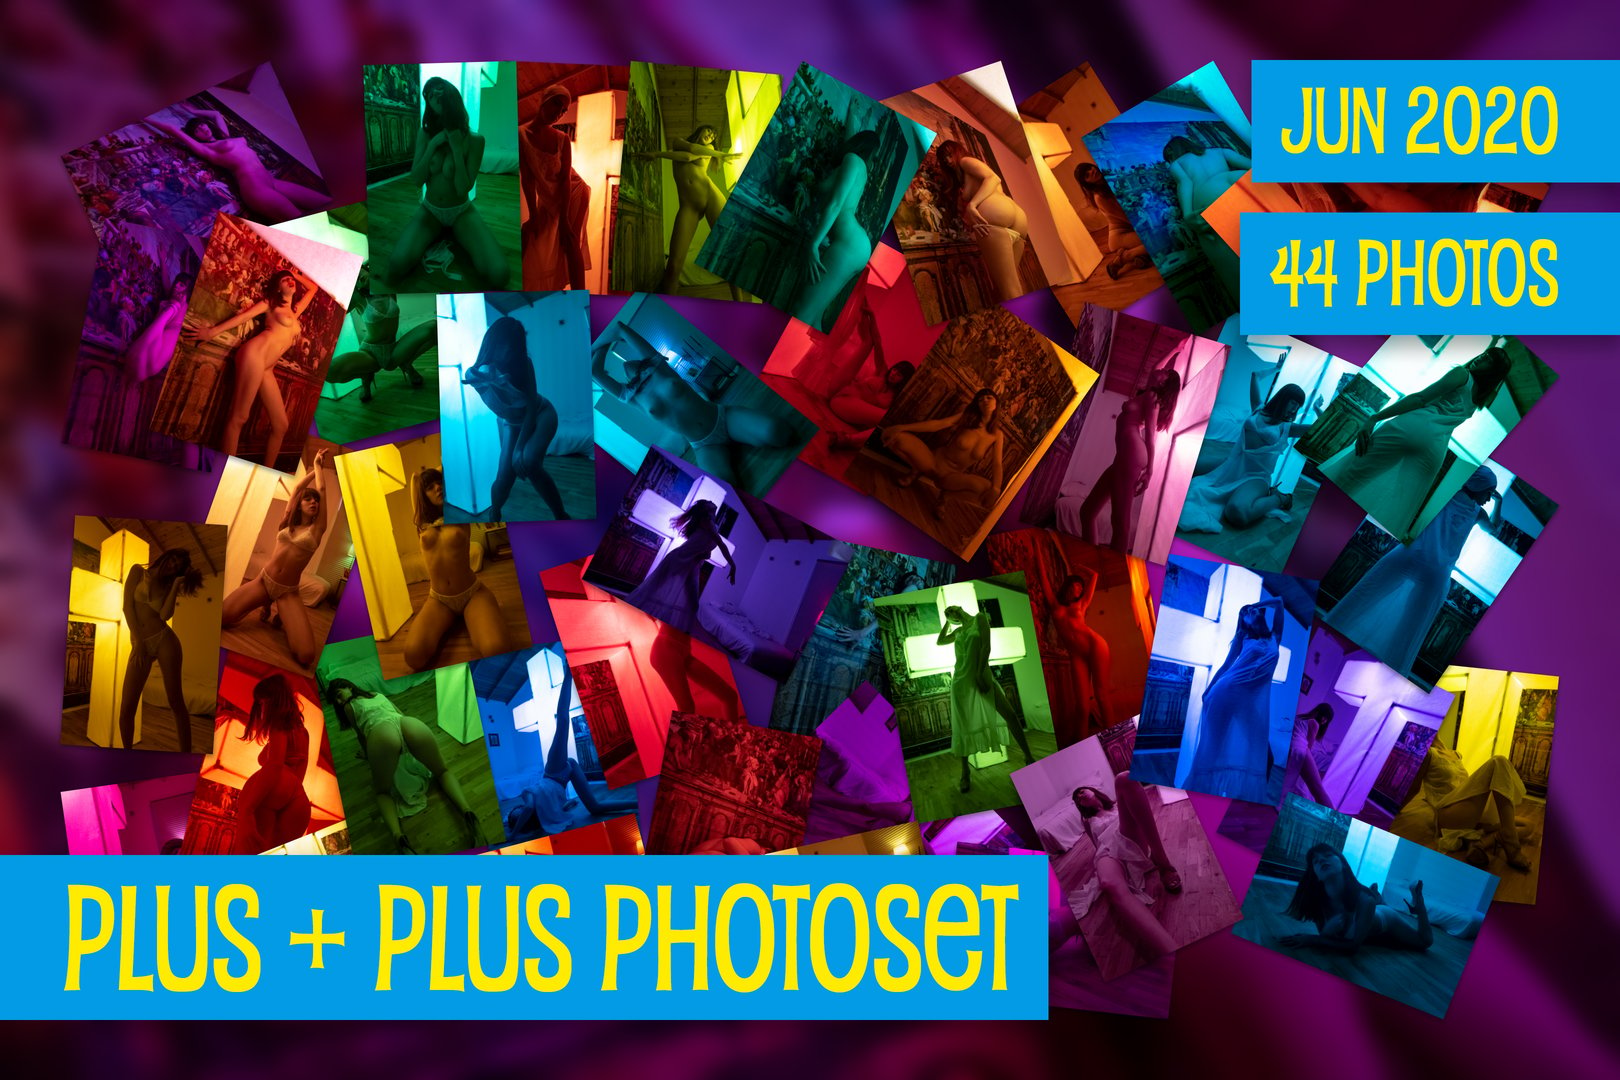 Thumbnail for the June 2020 Plus + Plus Photoset